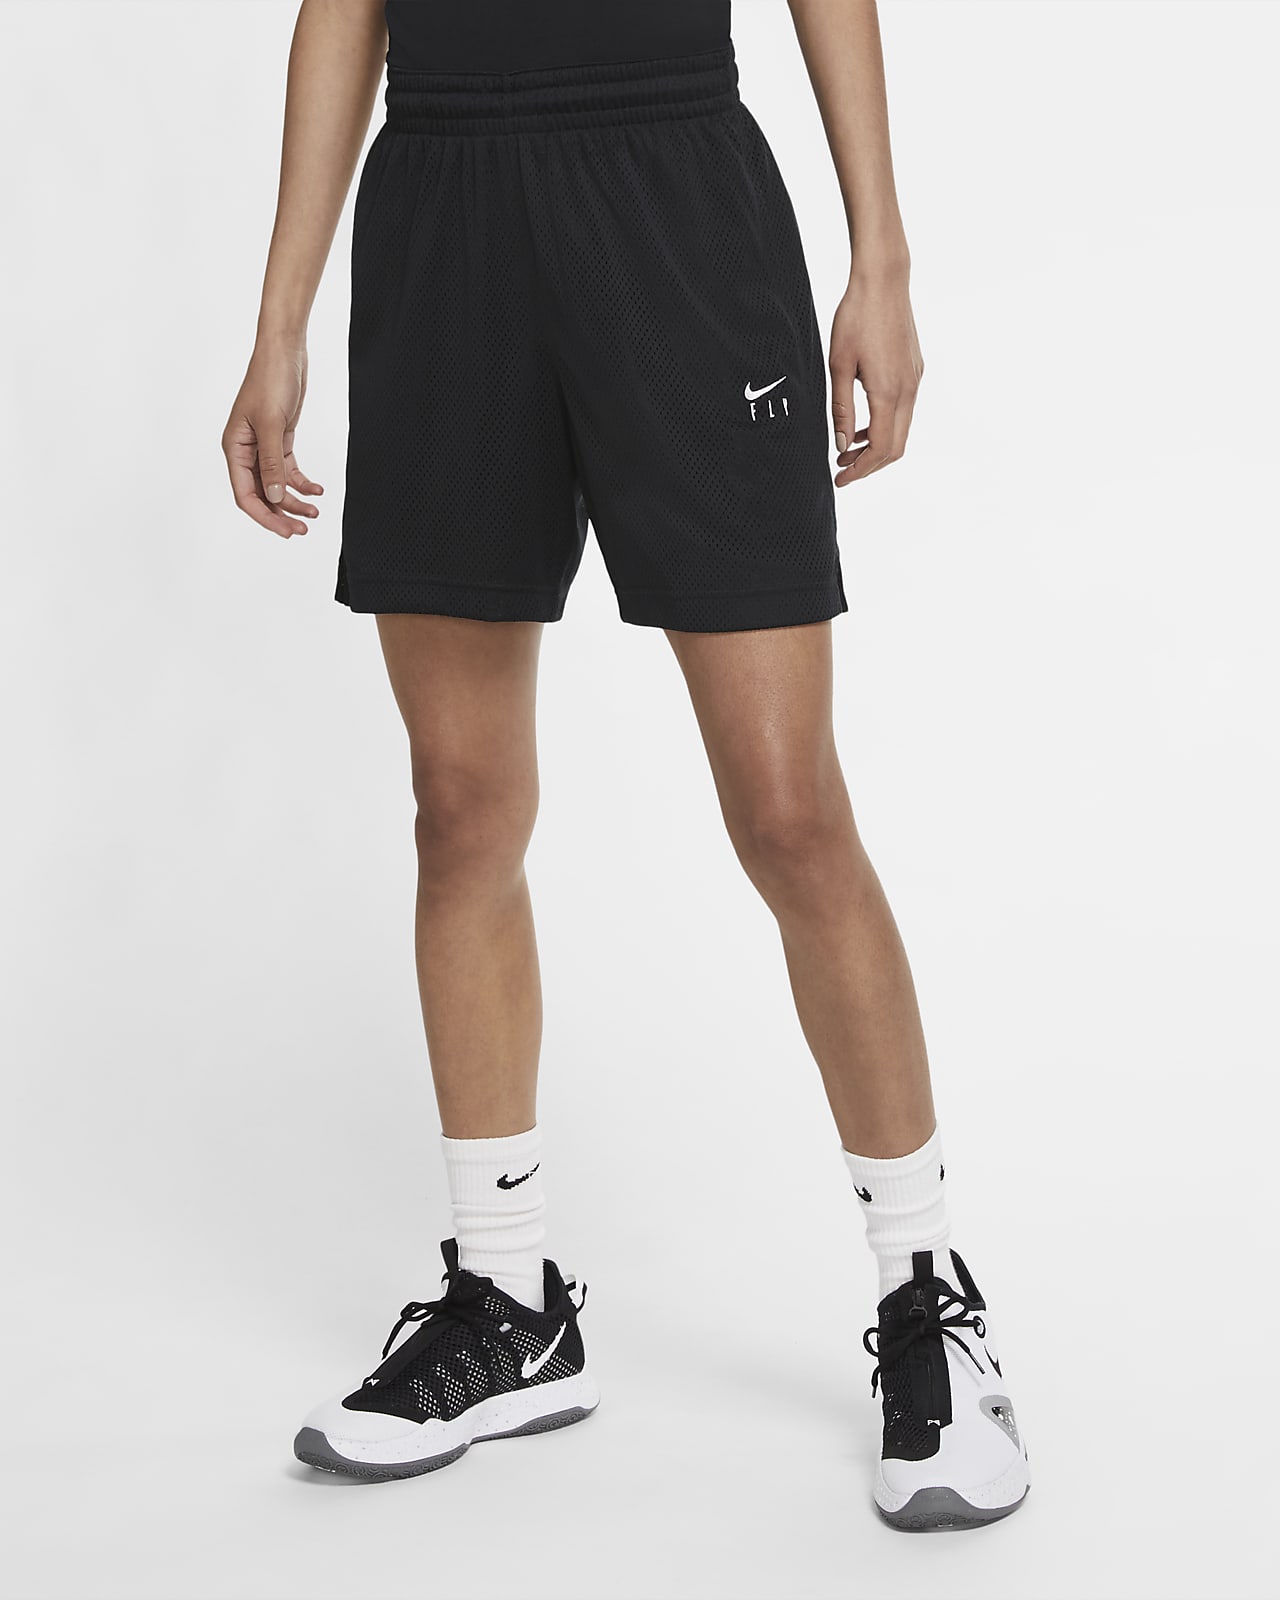 Short de basketball Nike Swoosh Fly pour Femme